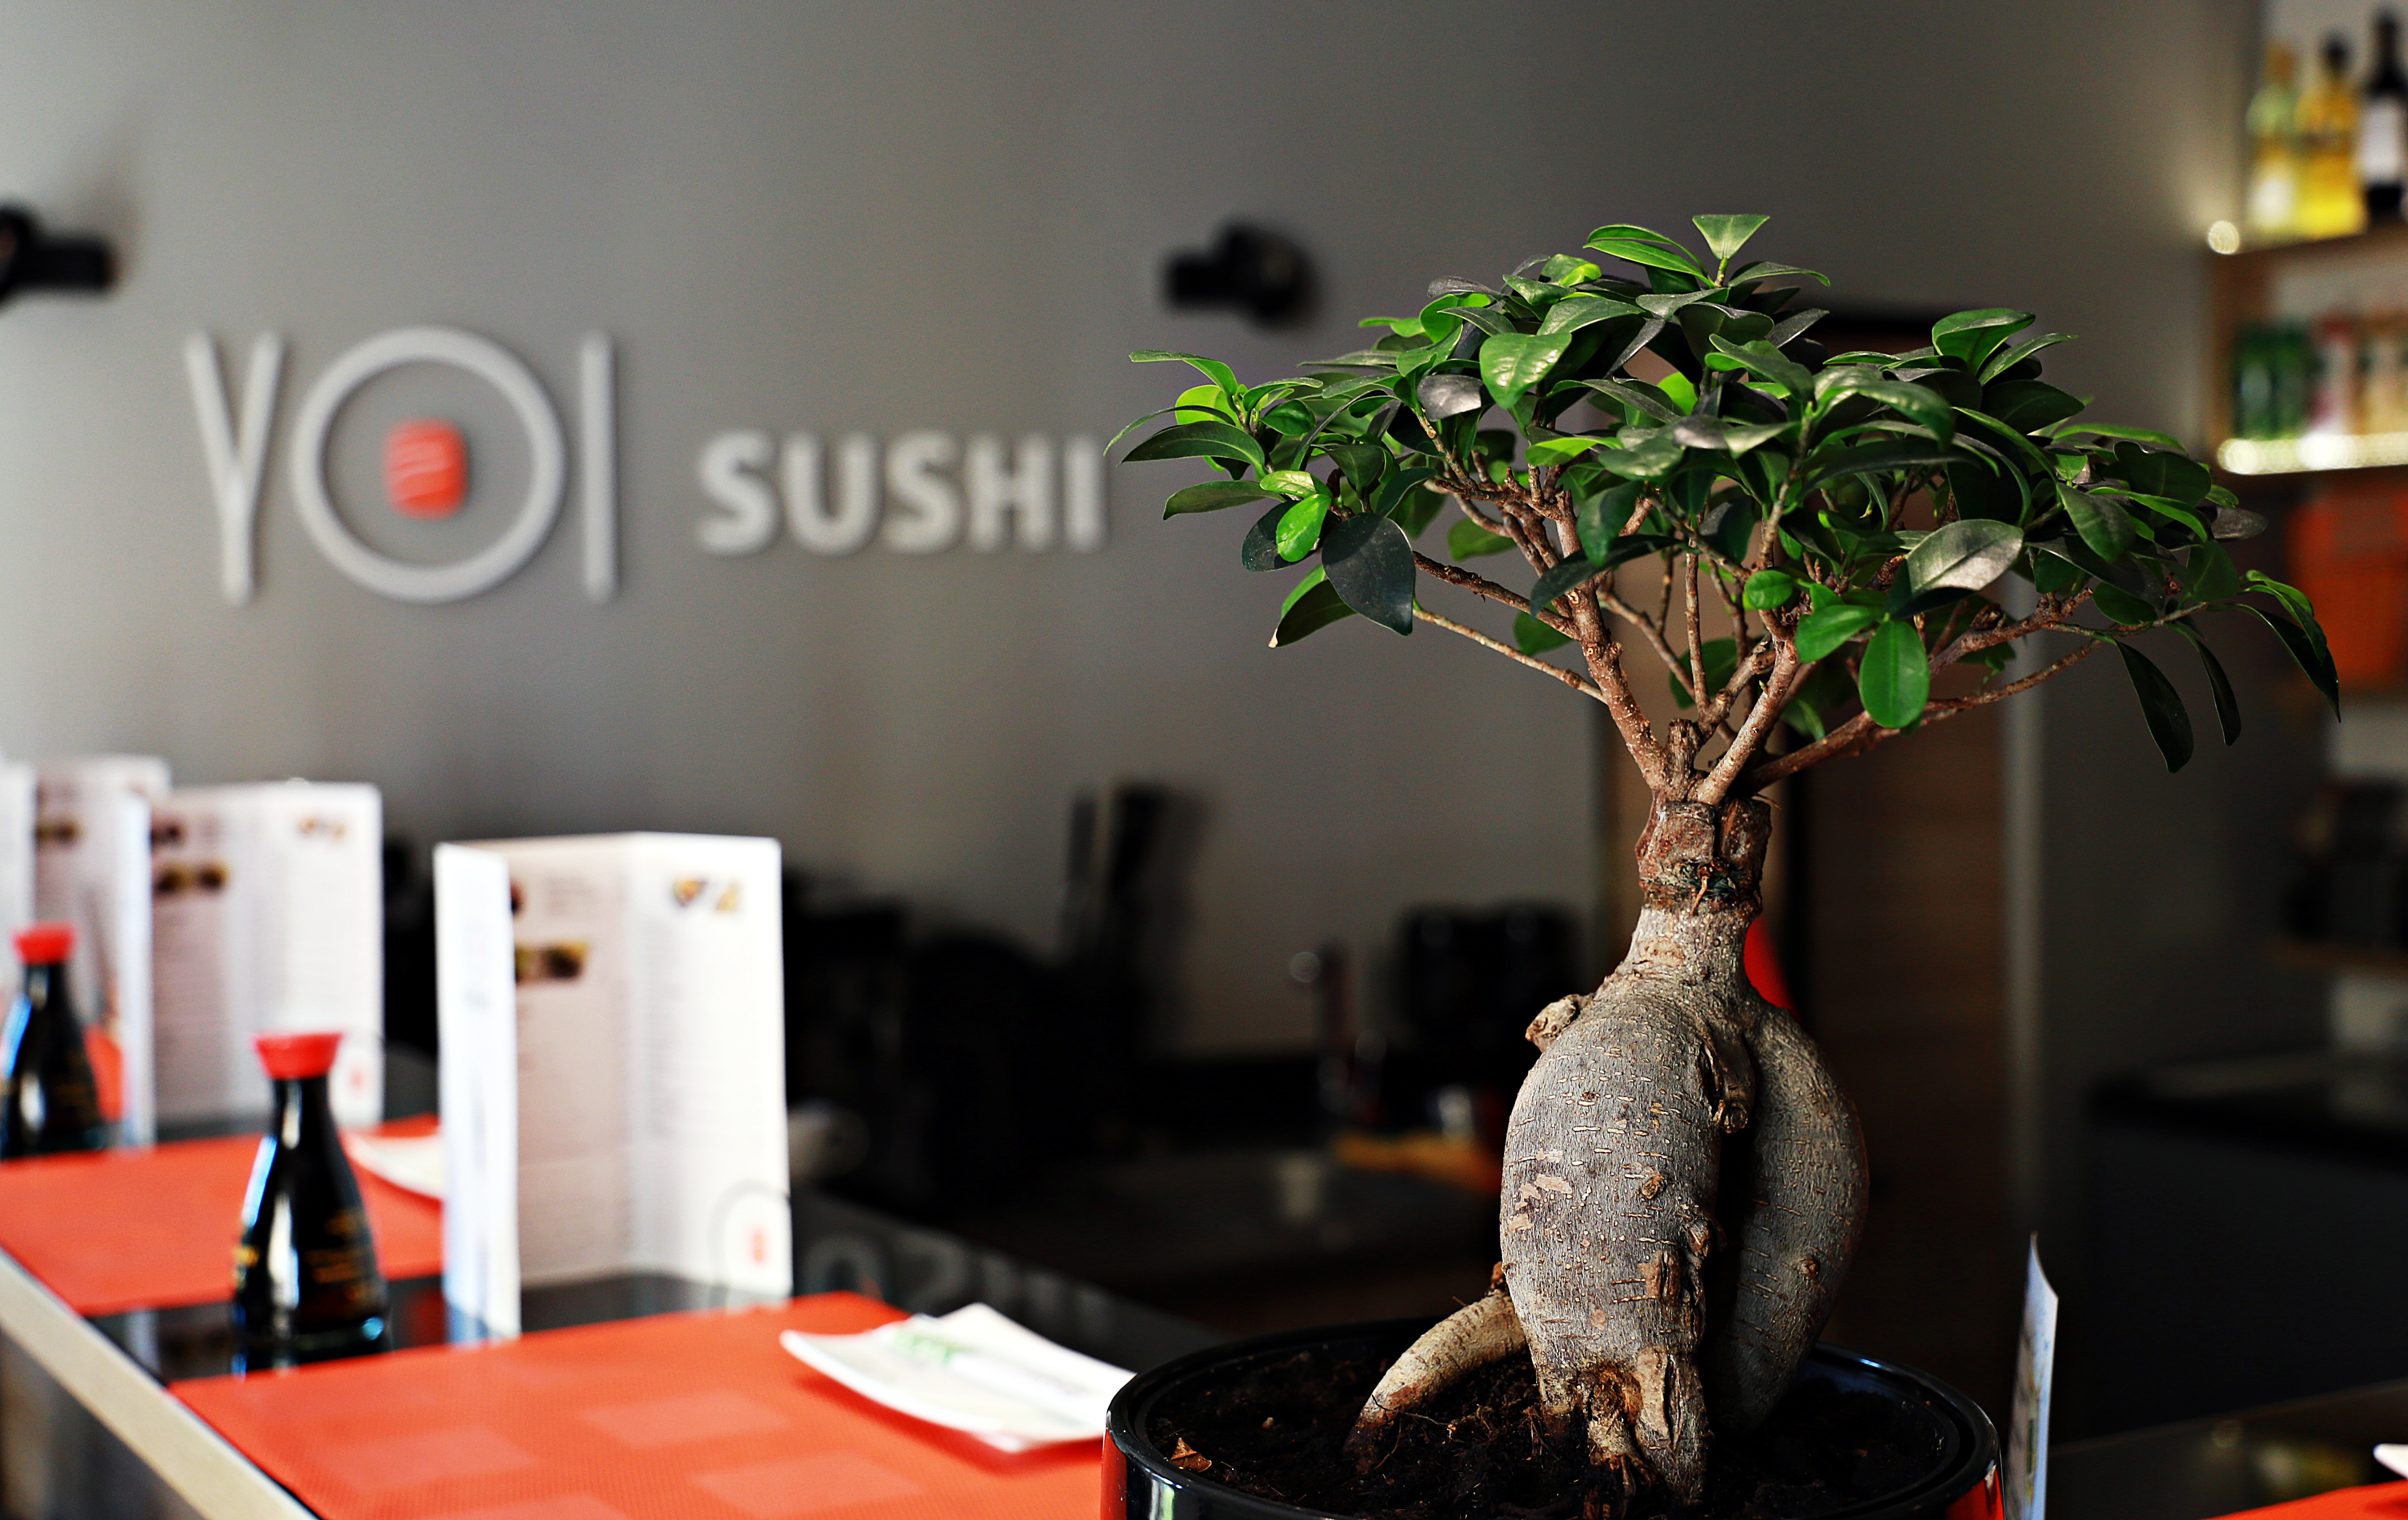 Restauracja Yoi Sushi Olsztyn - Sobota 18.09 sala na górze